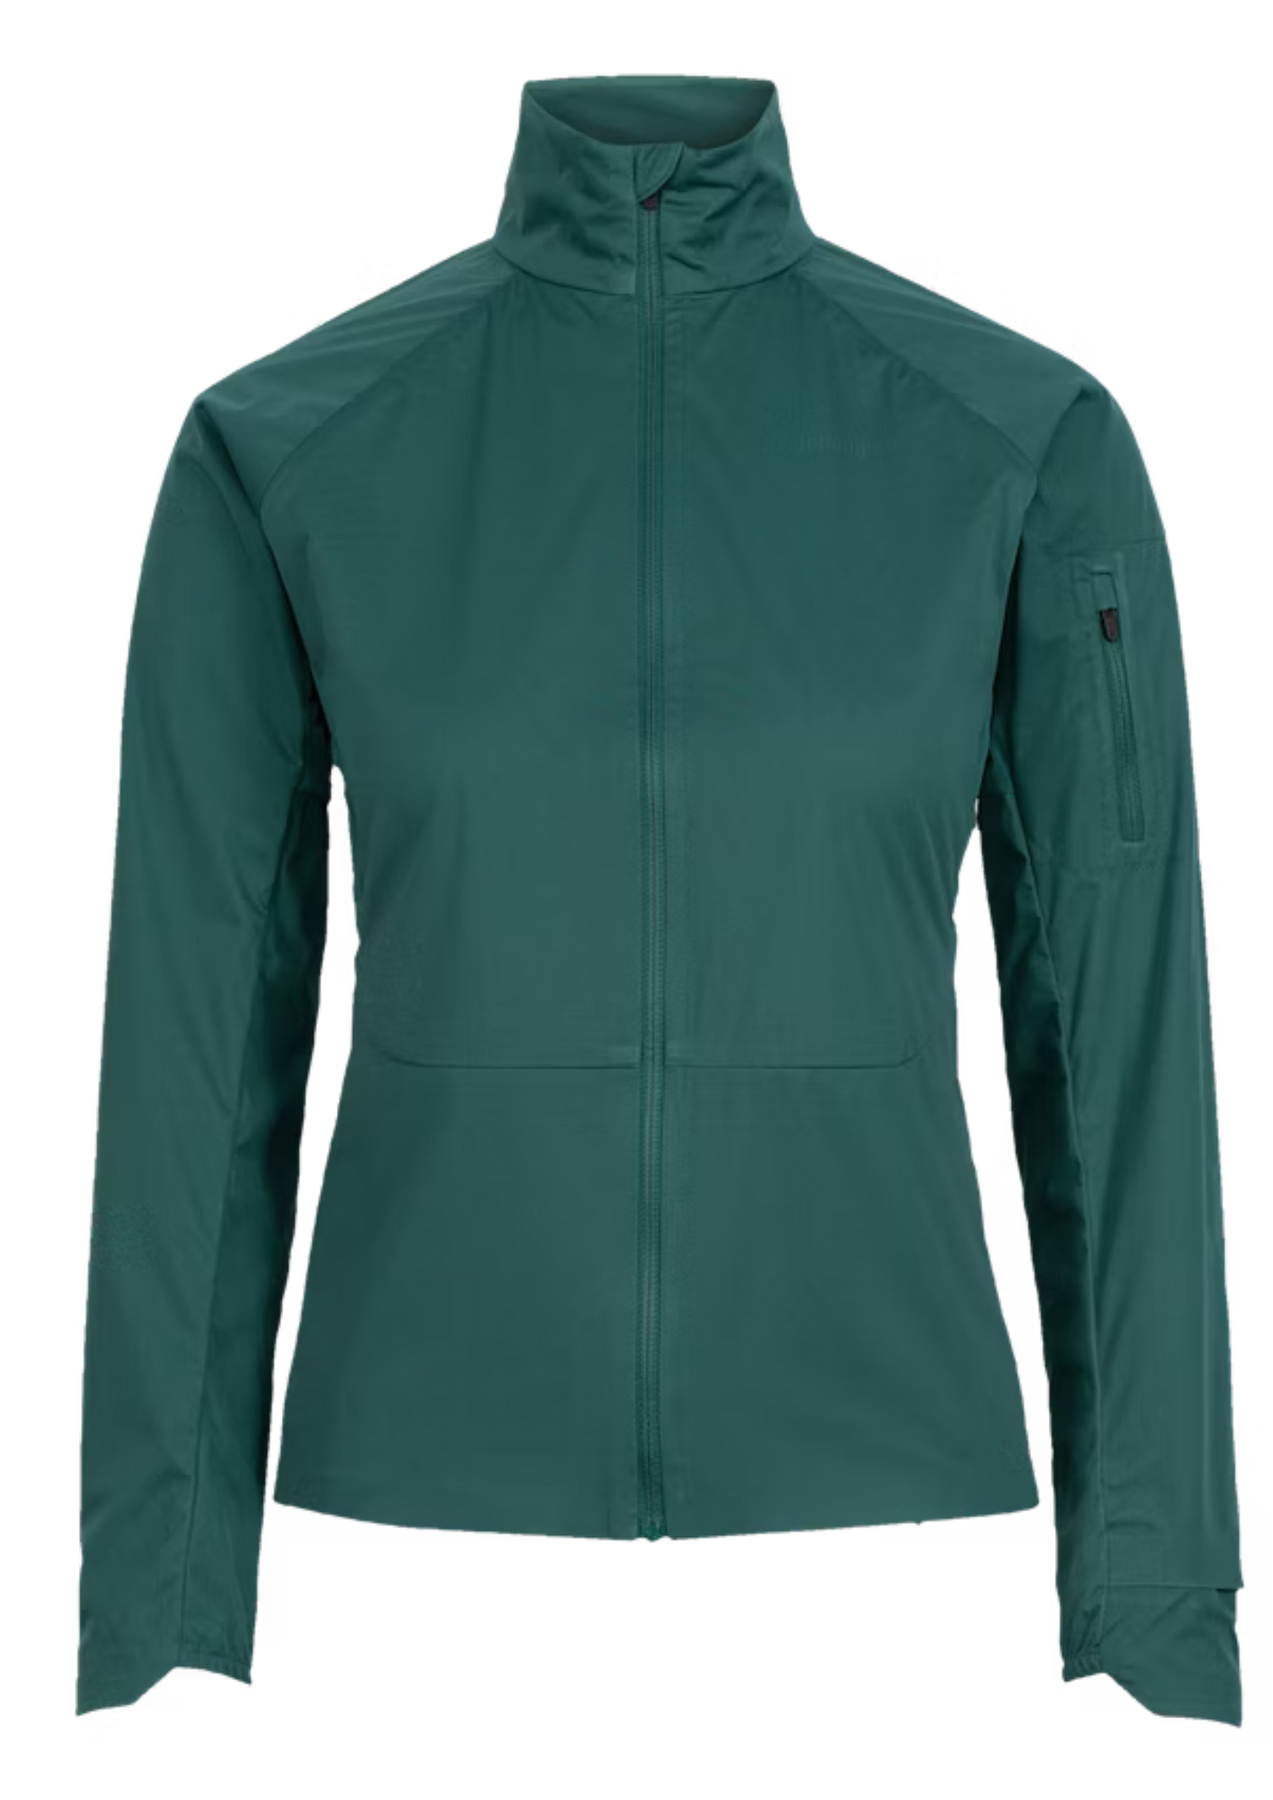 Discipline Jacket 2.0 - Dark Seagreen